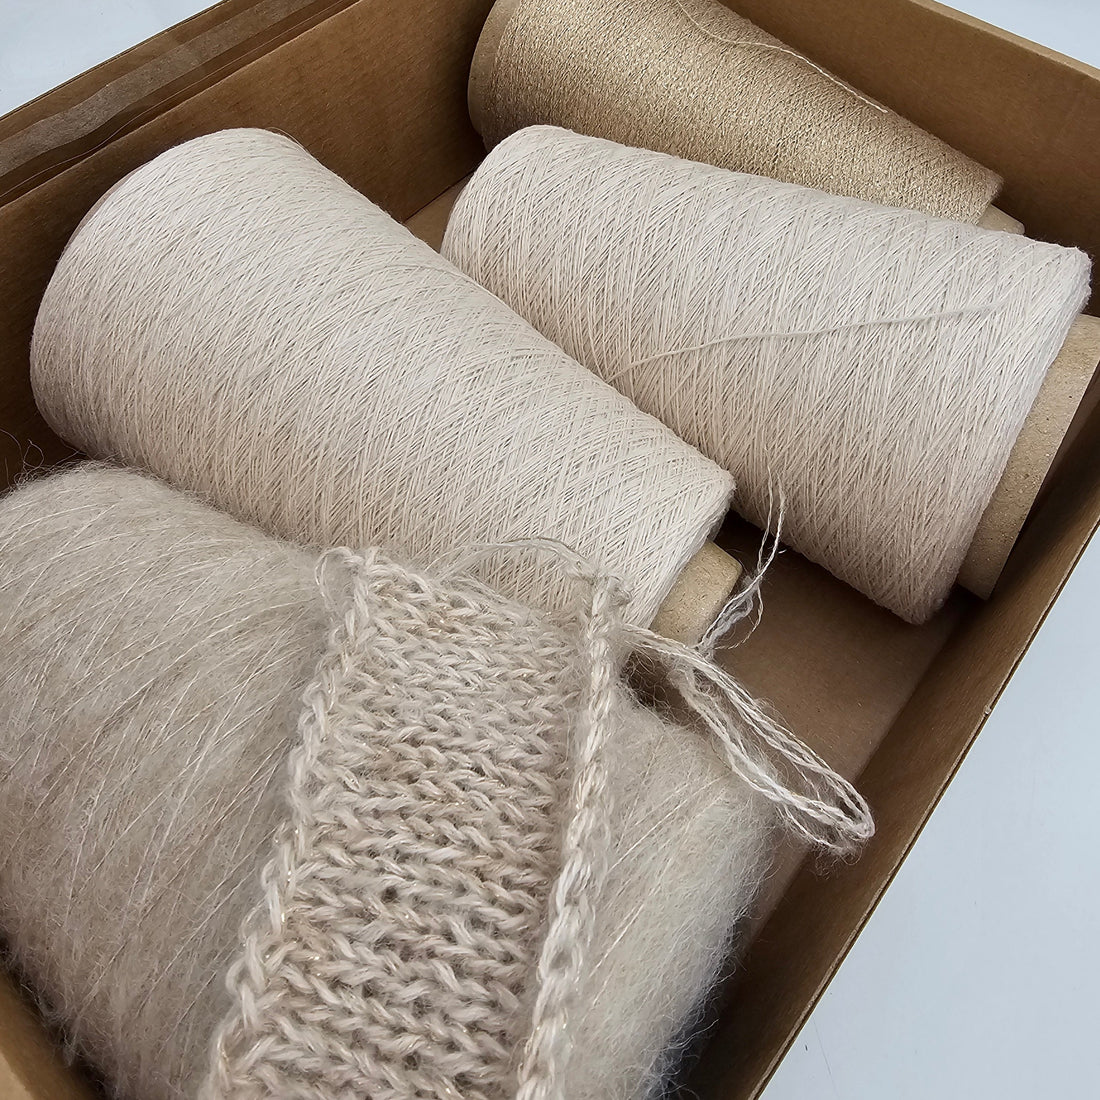 Lion Brand Jiffy Bonus Bundle Yarn Seafoam 451-108 (1-Skein) Same Dye Lot  Chunky Bulky #5 Soft Knitting Yarn Crochet 100% Acrylic Bundle with 1